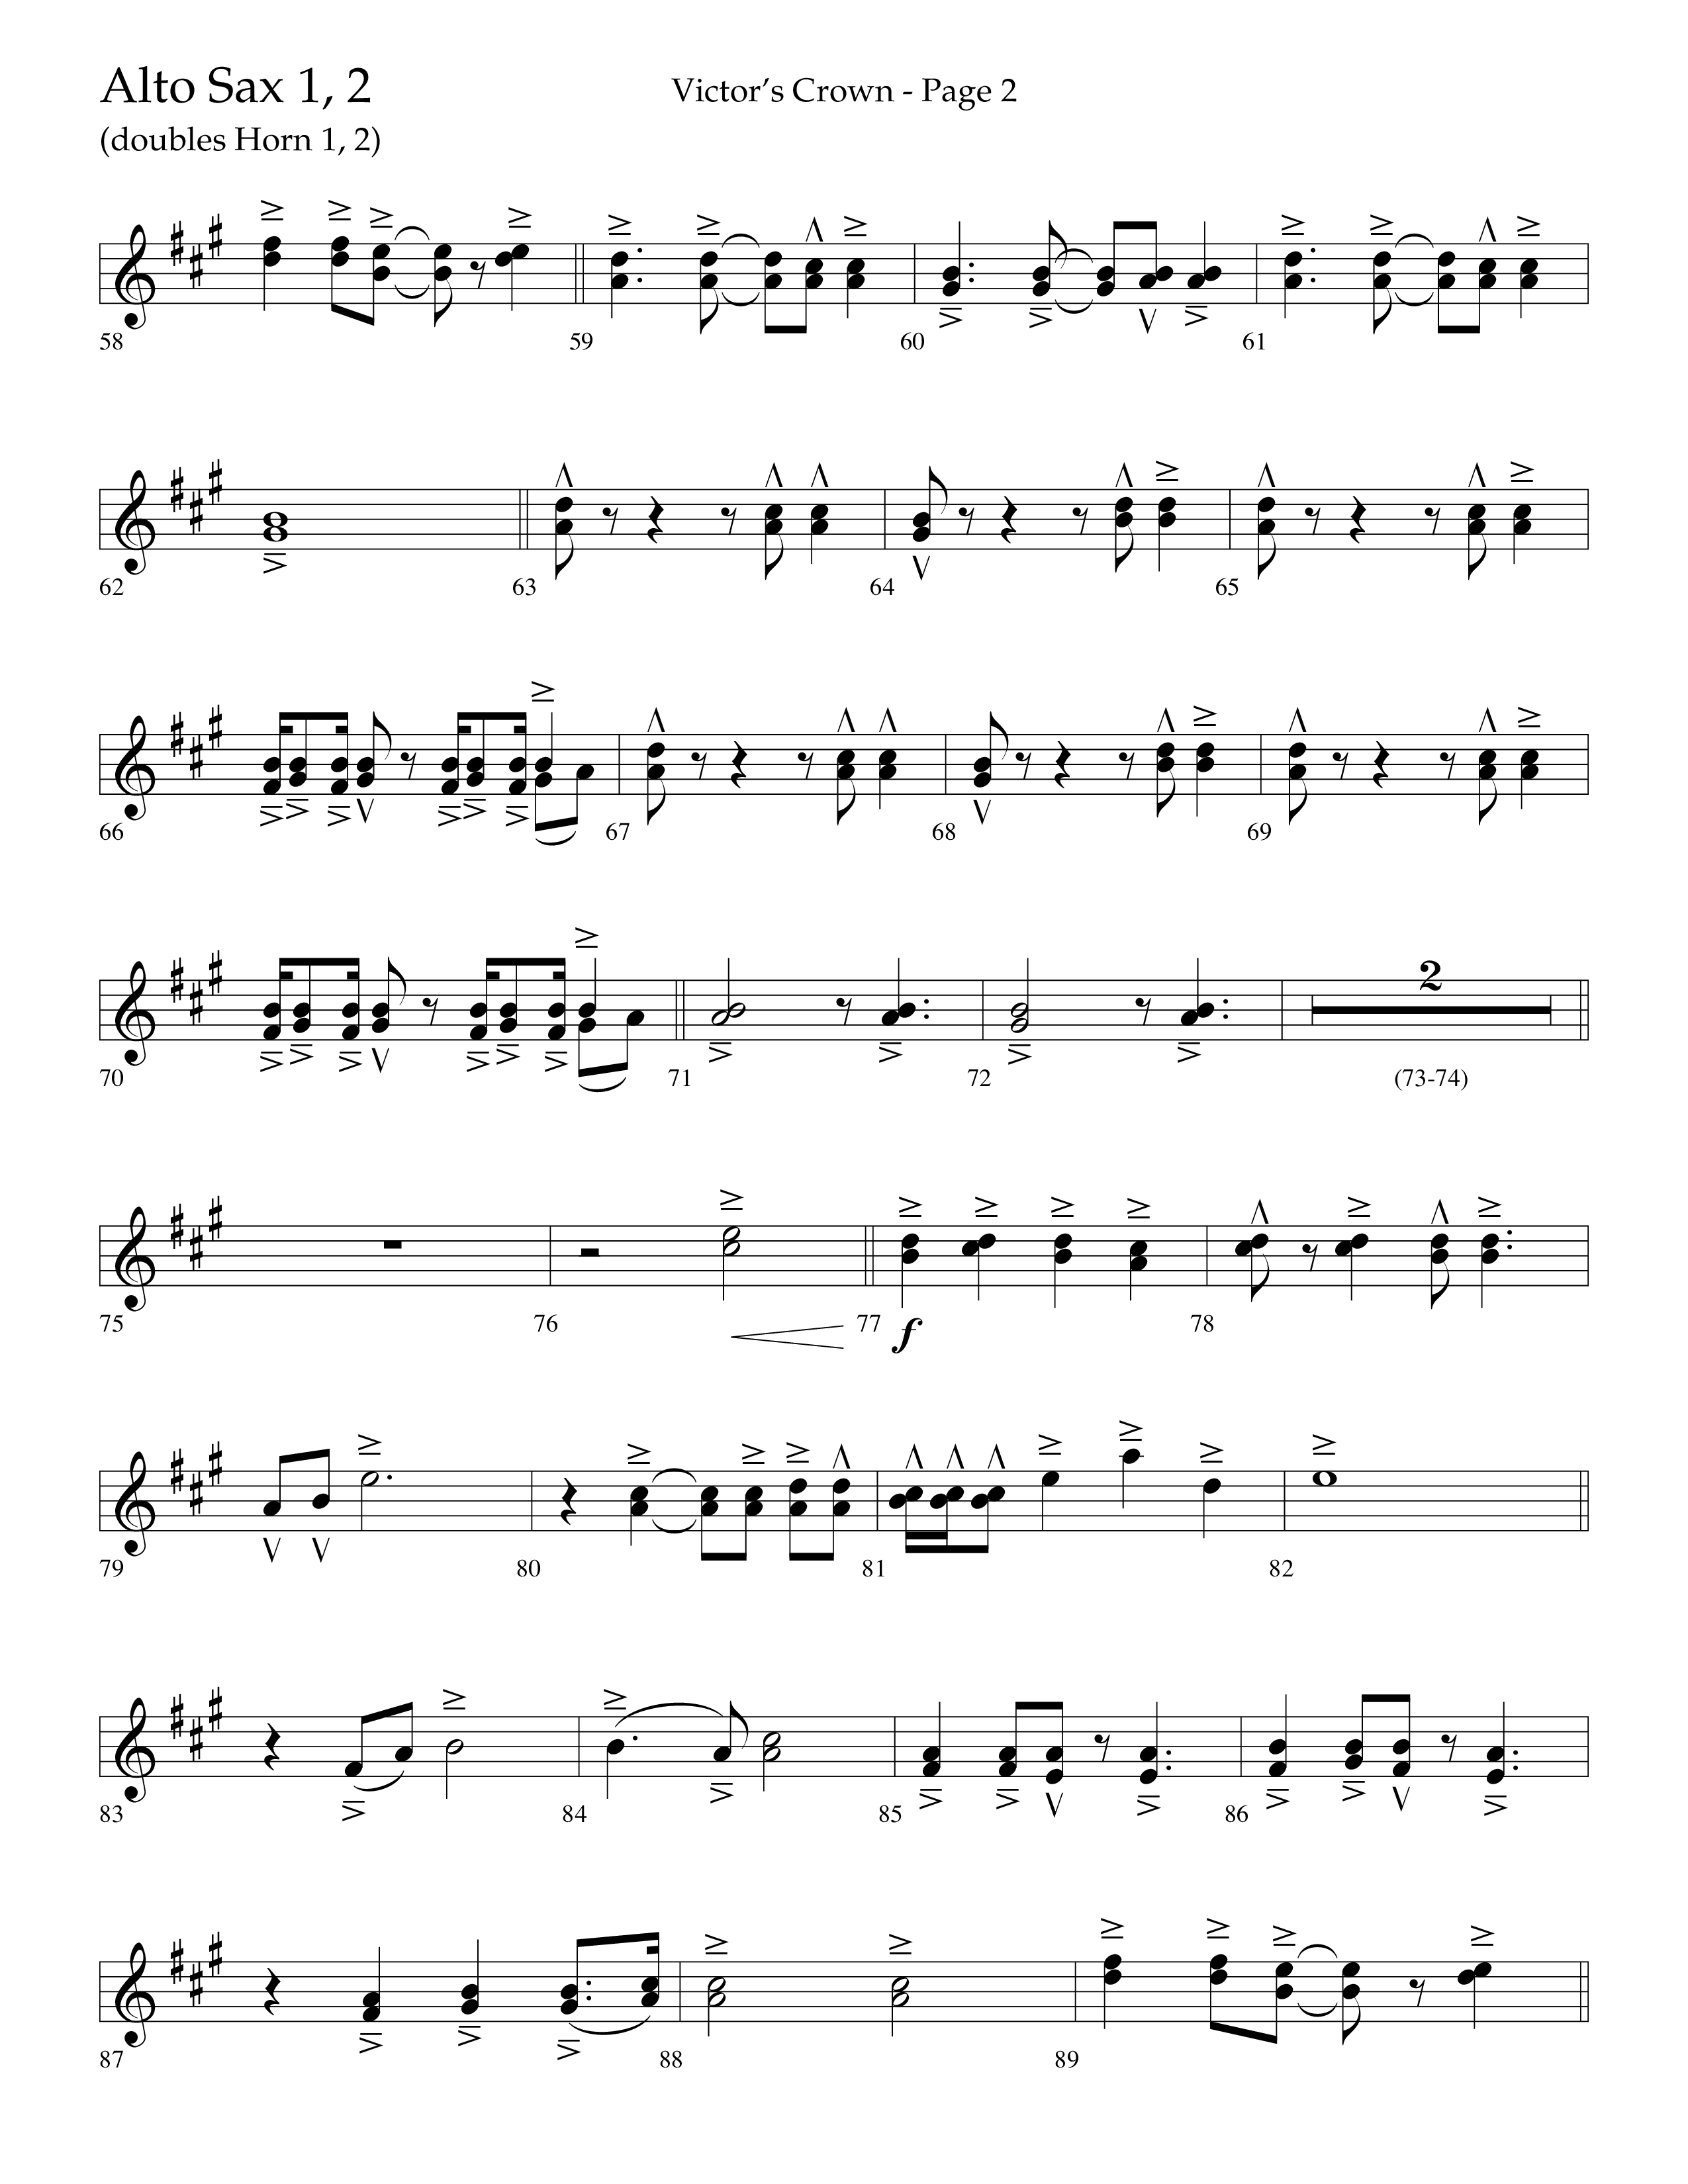 Victor's Crown (Choral Anthem SATB) Alto Sax 1/2 (Lifeway Choral / Arr. David T. Clydesdale)